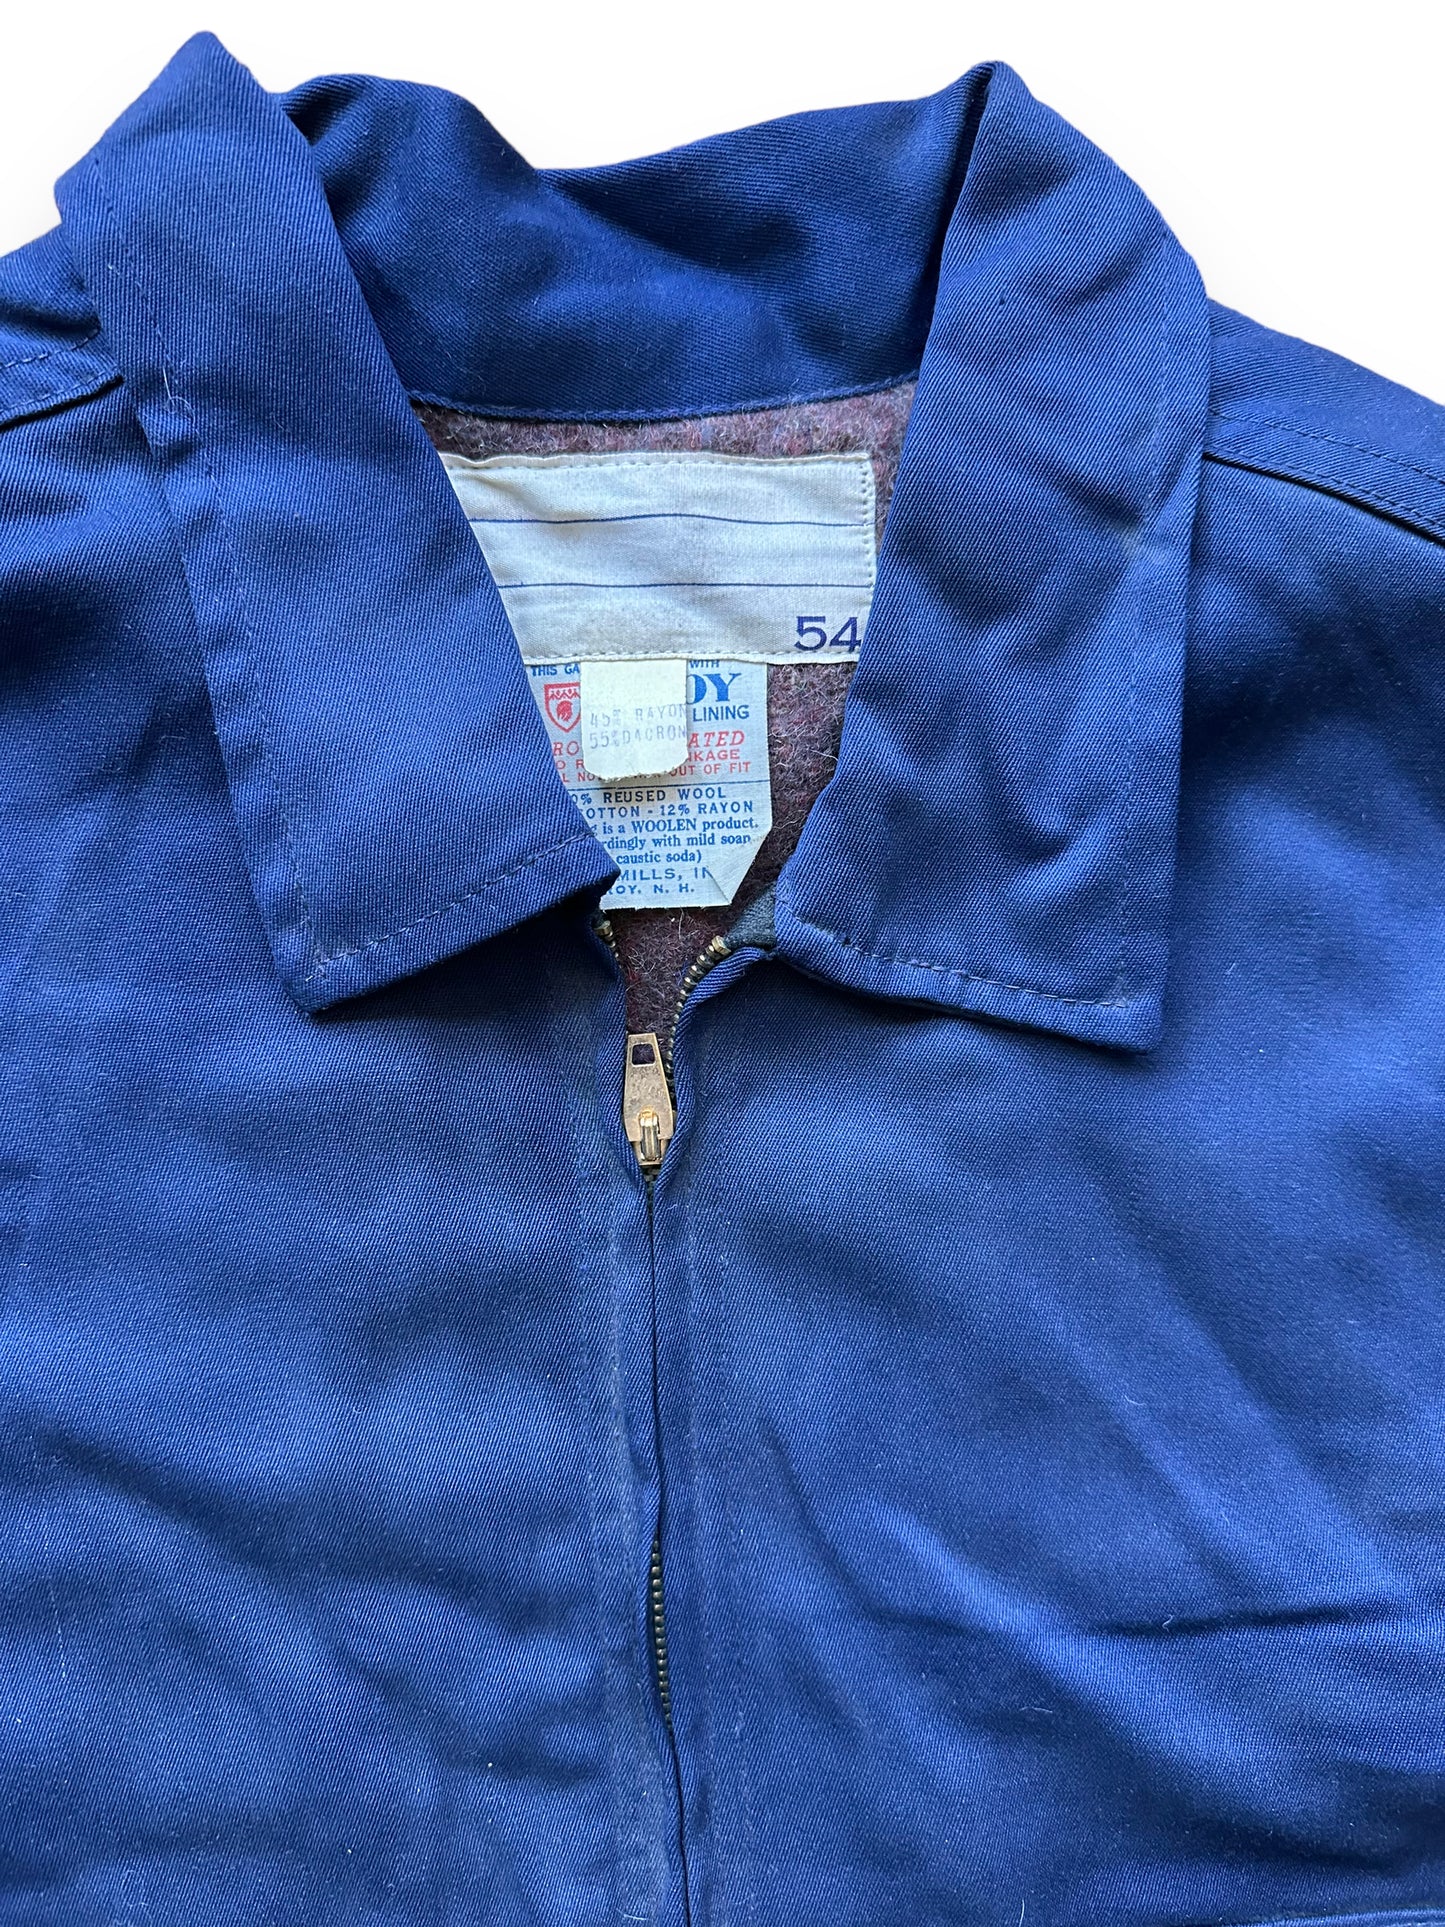 Tag View on Vintage Blue Troy Blanket Lined Gas Station Jacket SZ 54 | Vintage Workwear Jacket Seattle | Seattle Vintage Clothing